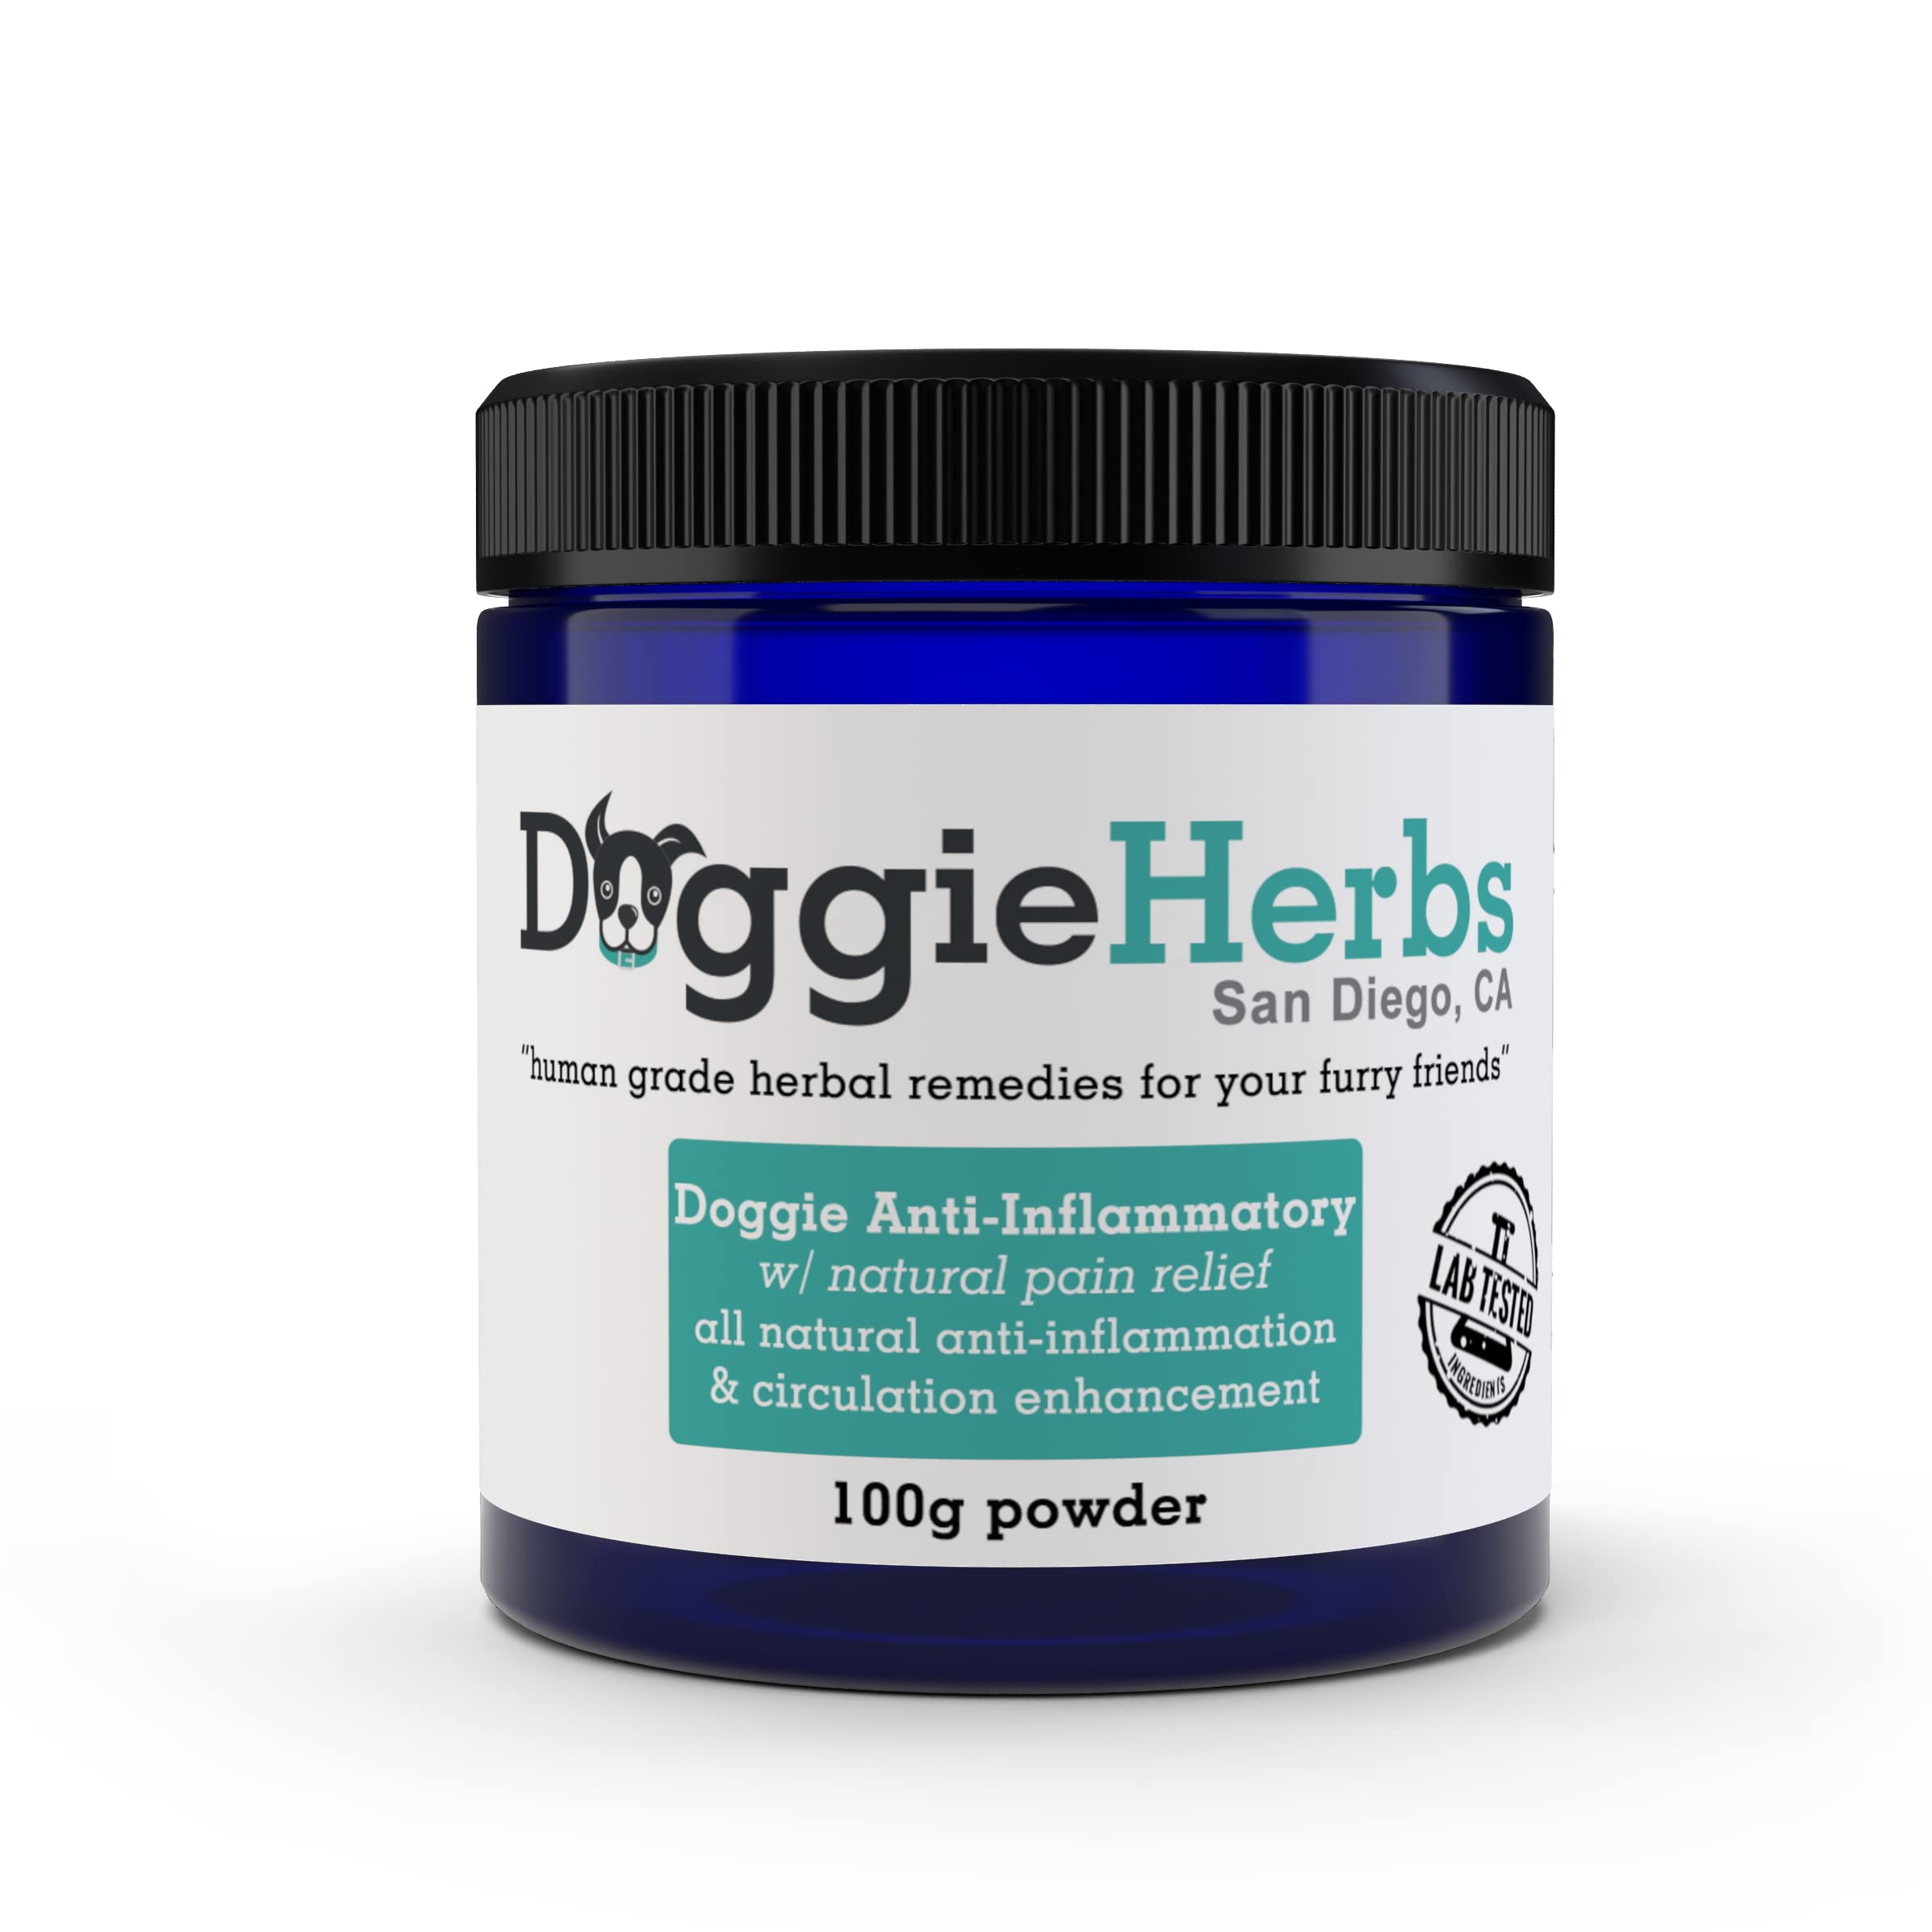 Doggie Herbs Doggie Anti-Inflammatory